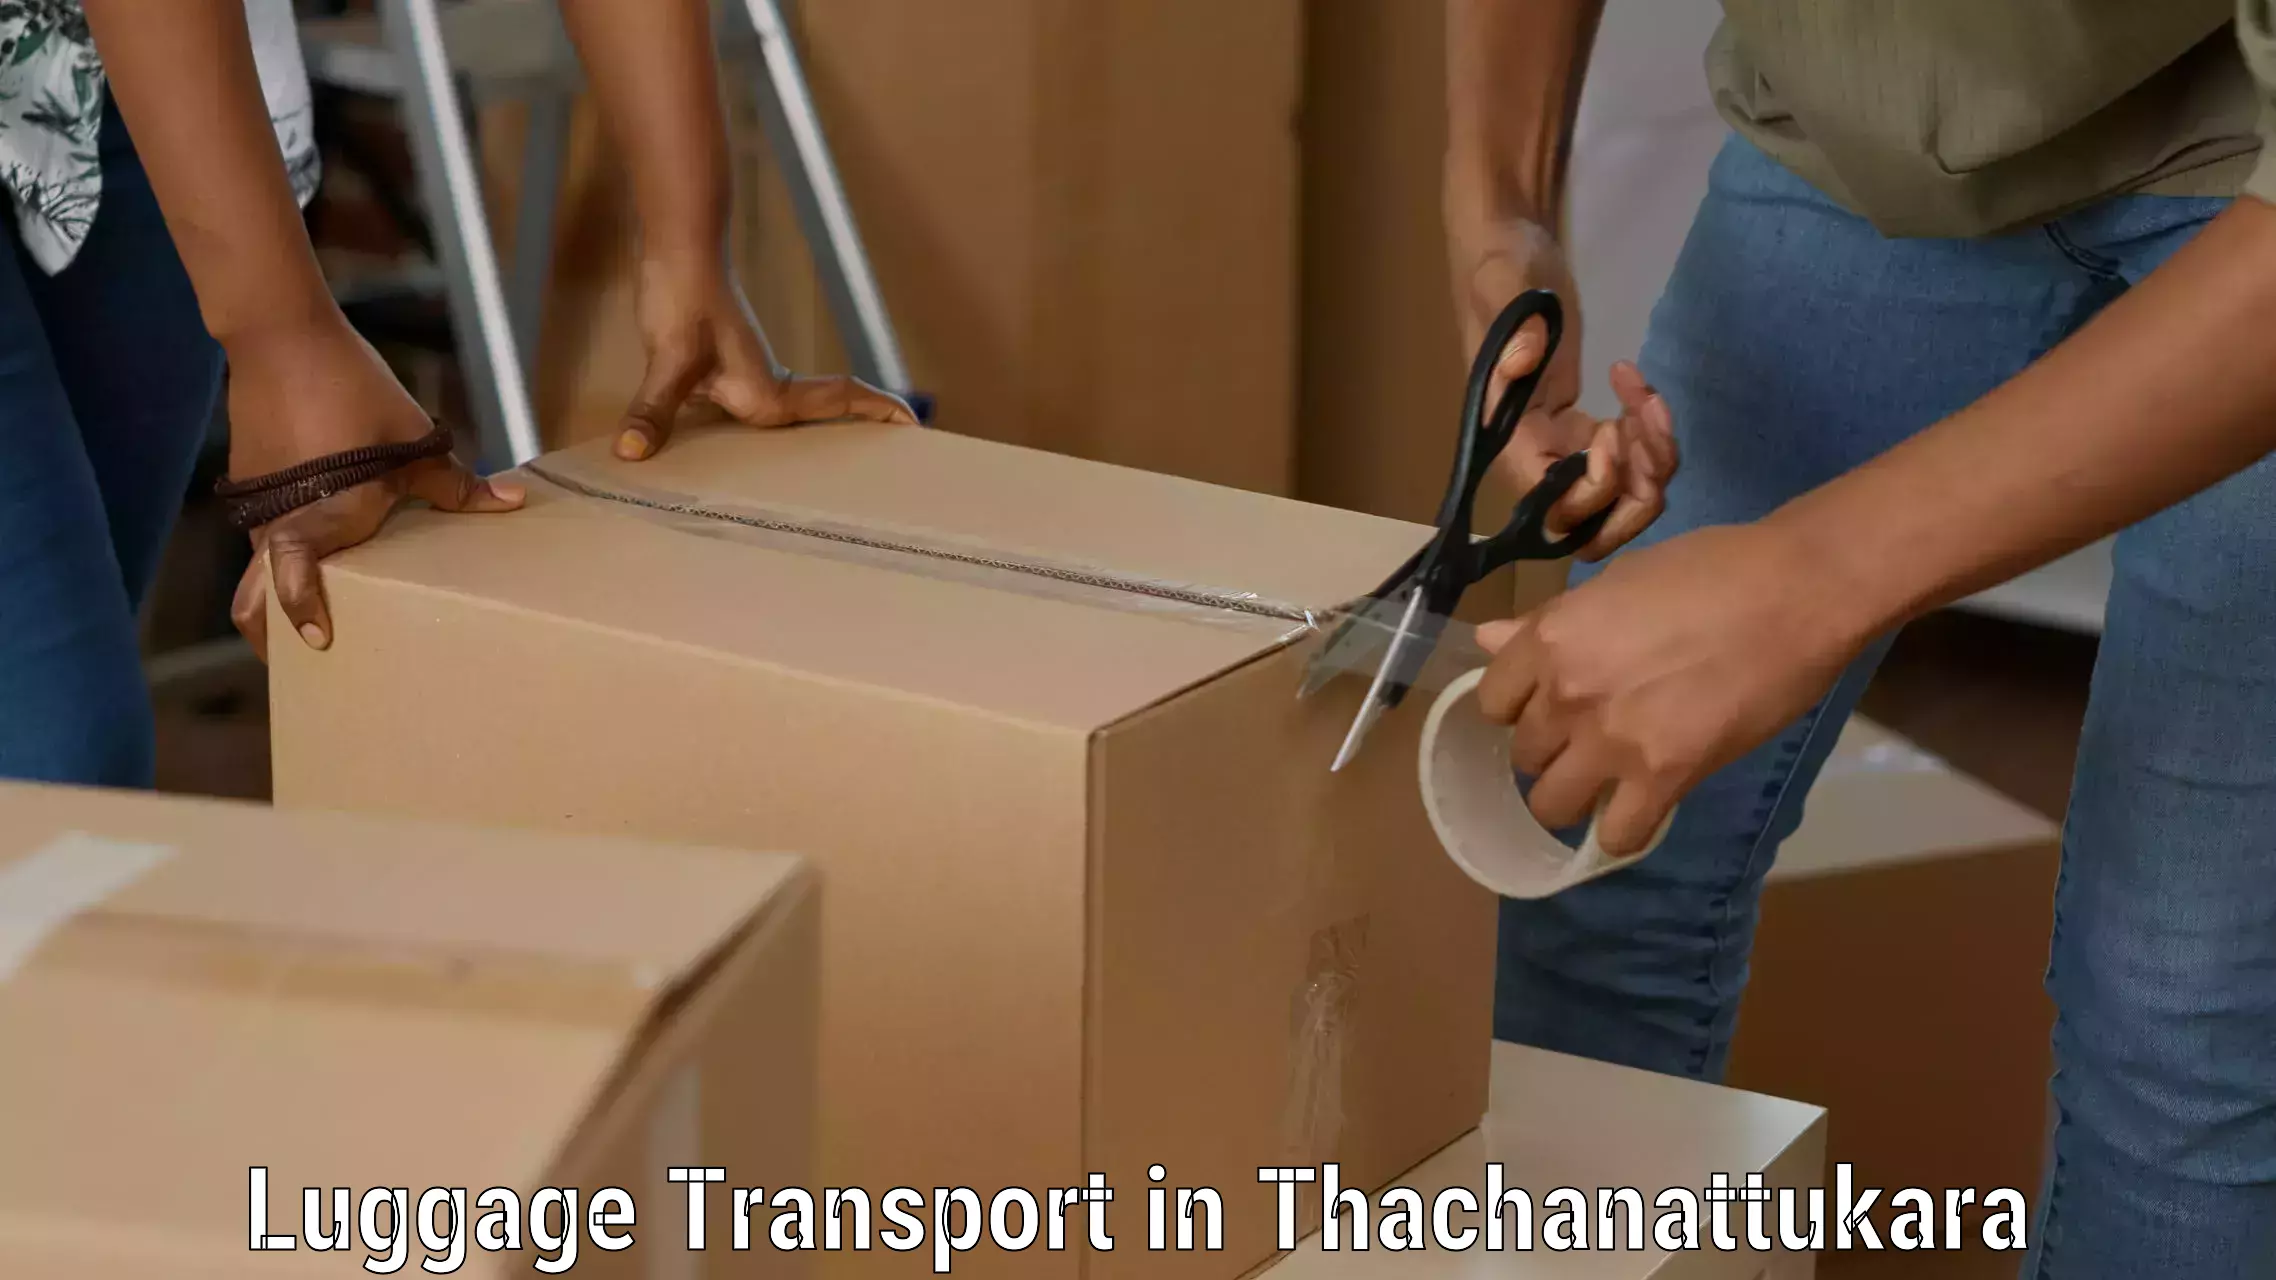 Baggage shipping experience in Thachanattukara